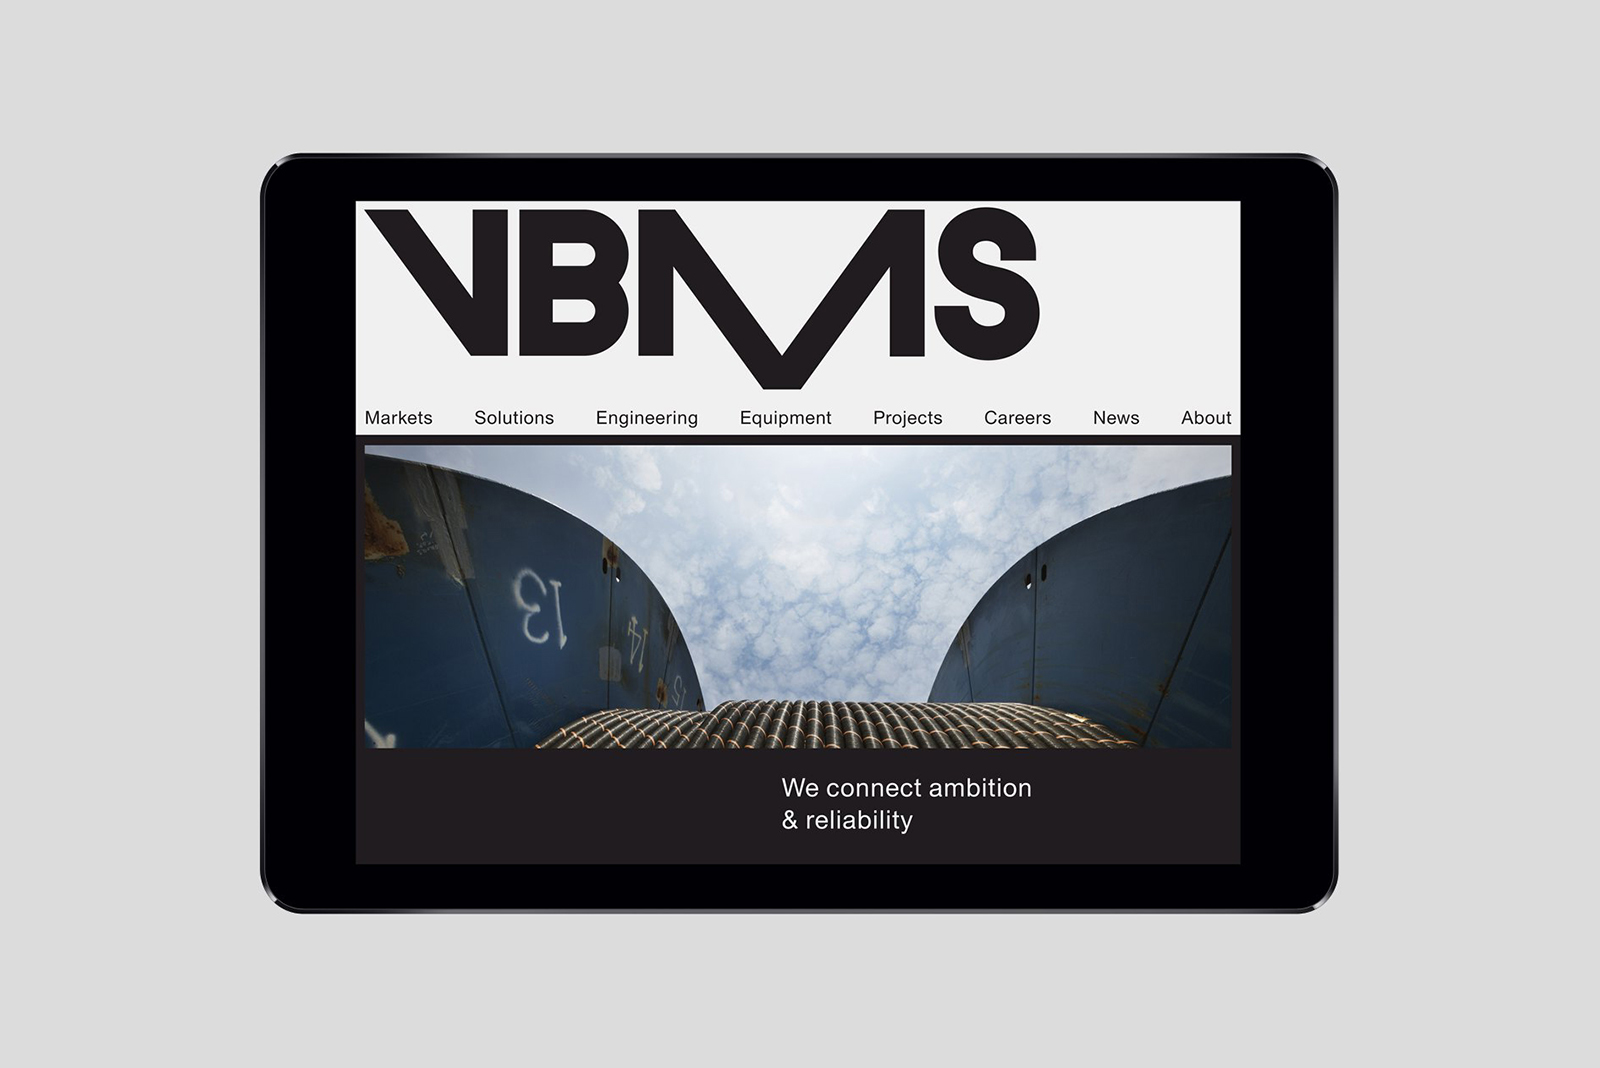 studio dumbar design visual brand identity for VBMS expert in offshore installations wensite design